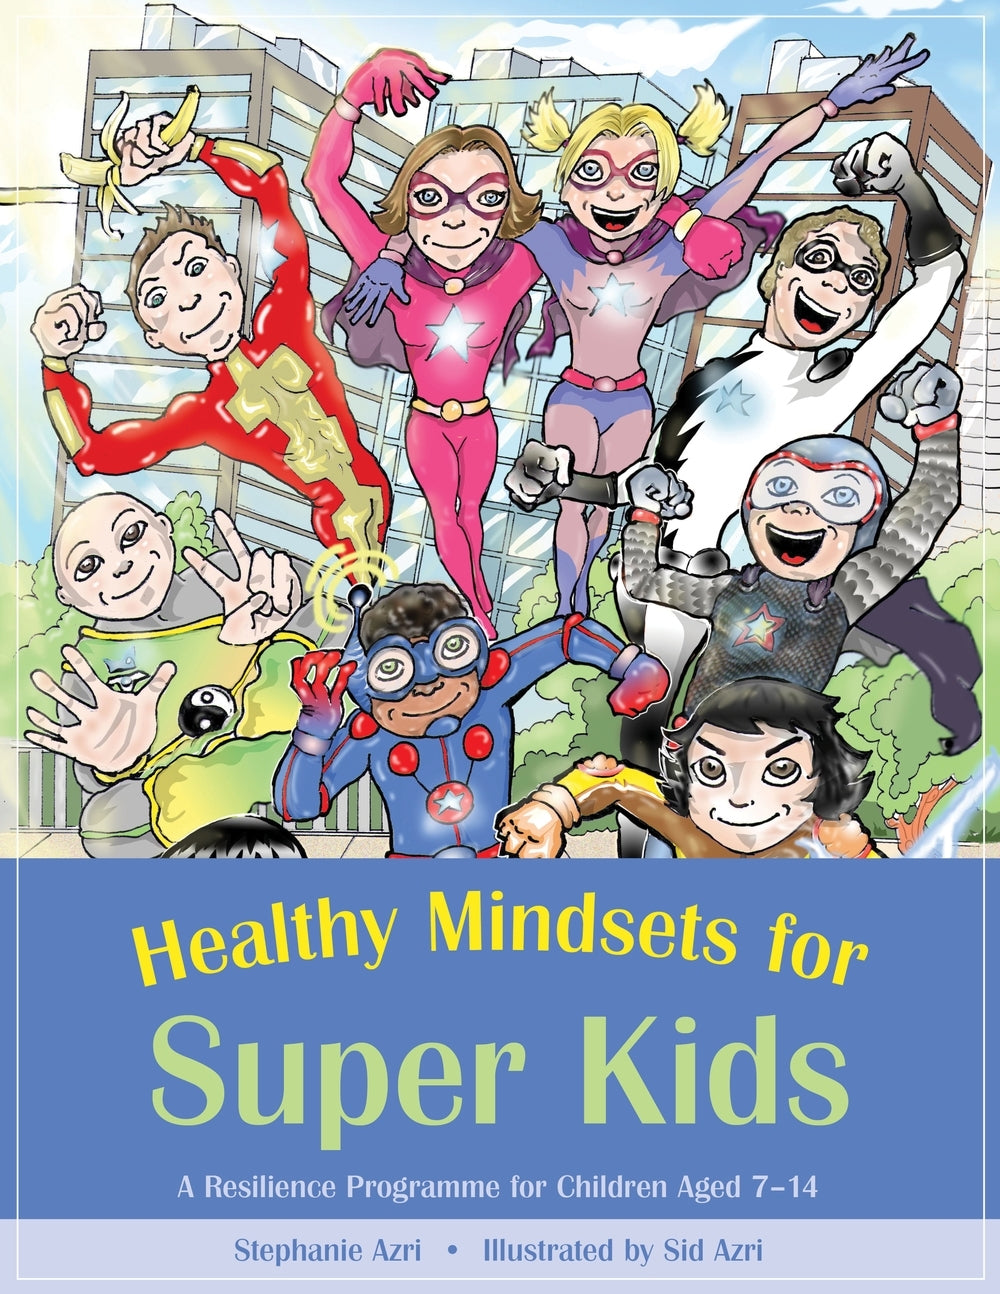 Healthy Mindsets for Super Kids by Stephanie Azri